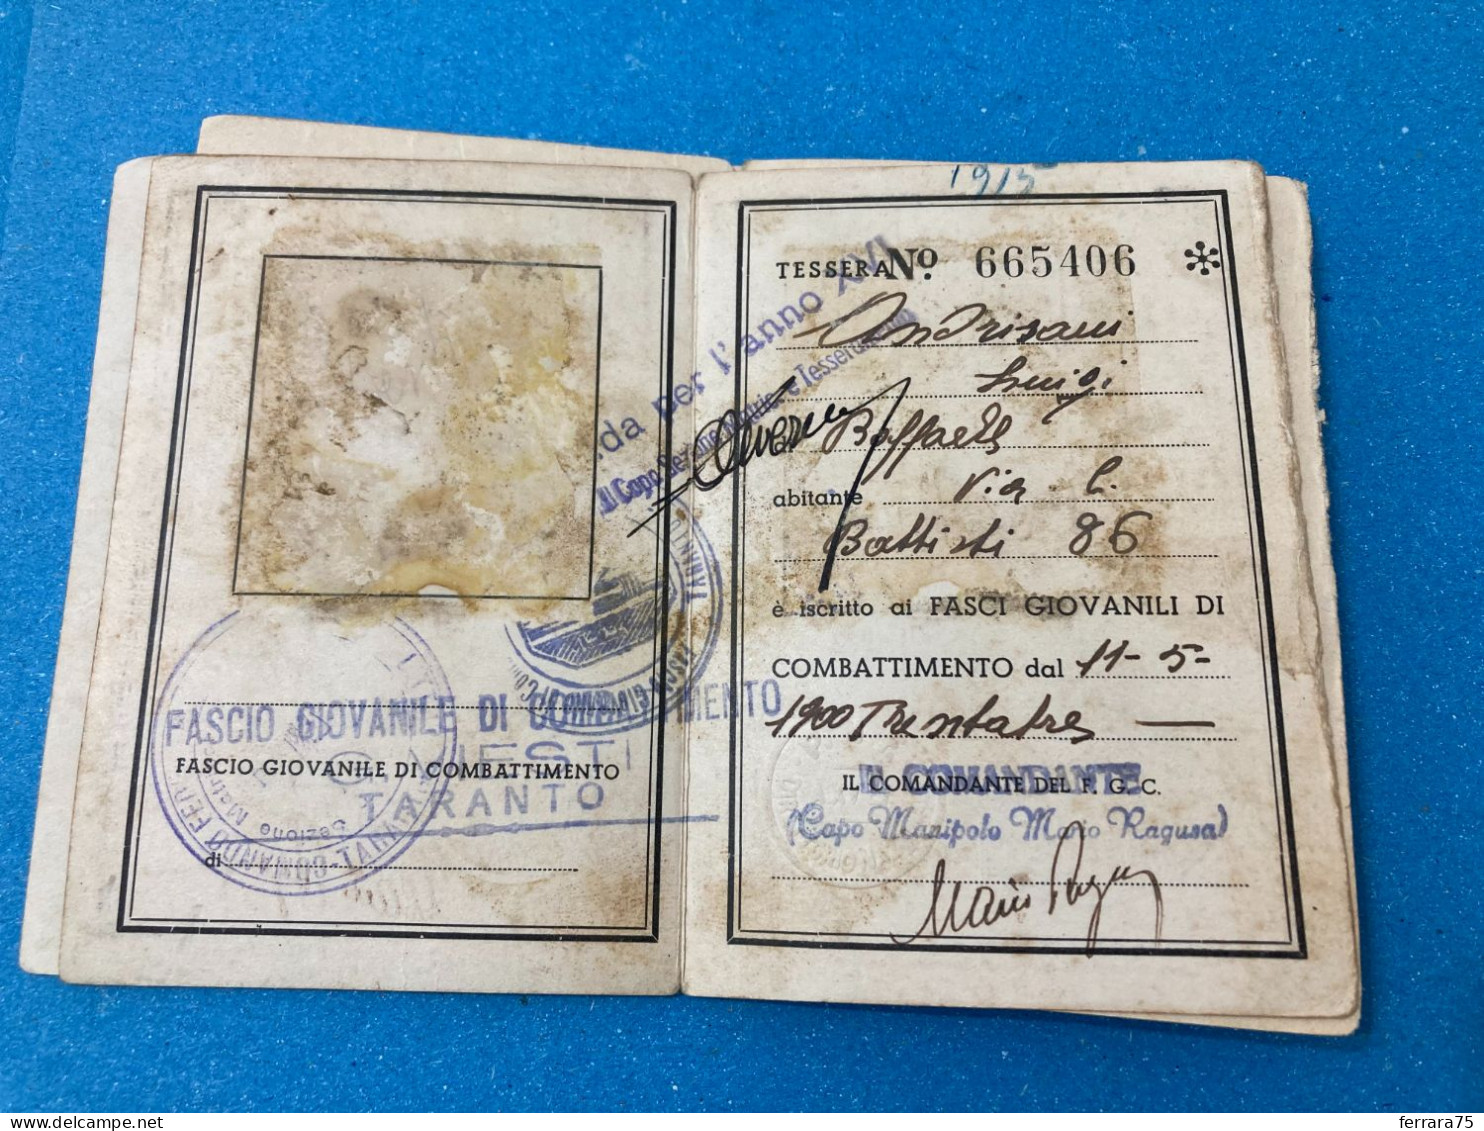 TESSERA FGC PNF TARANTO 1933. - Membership Cards